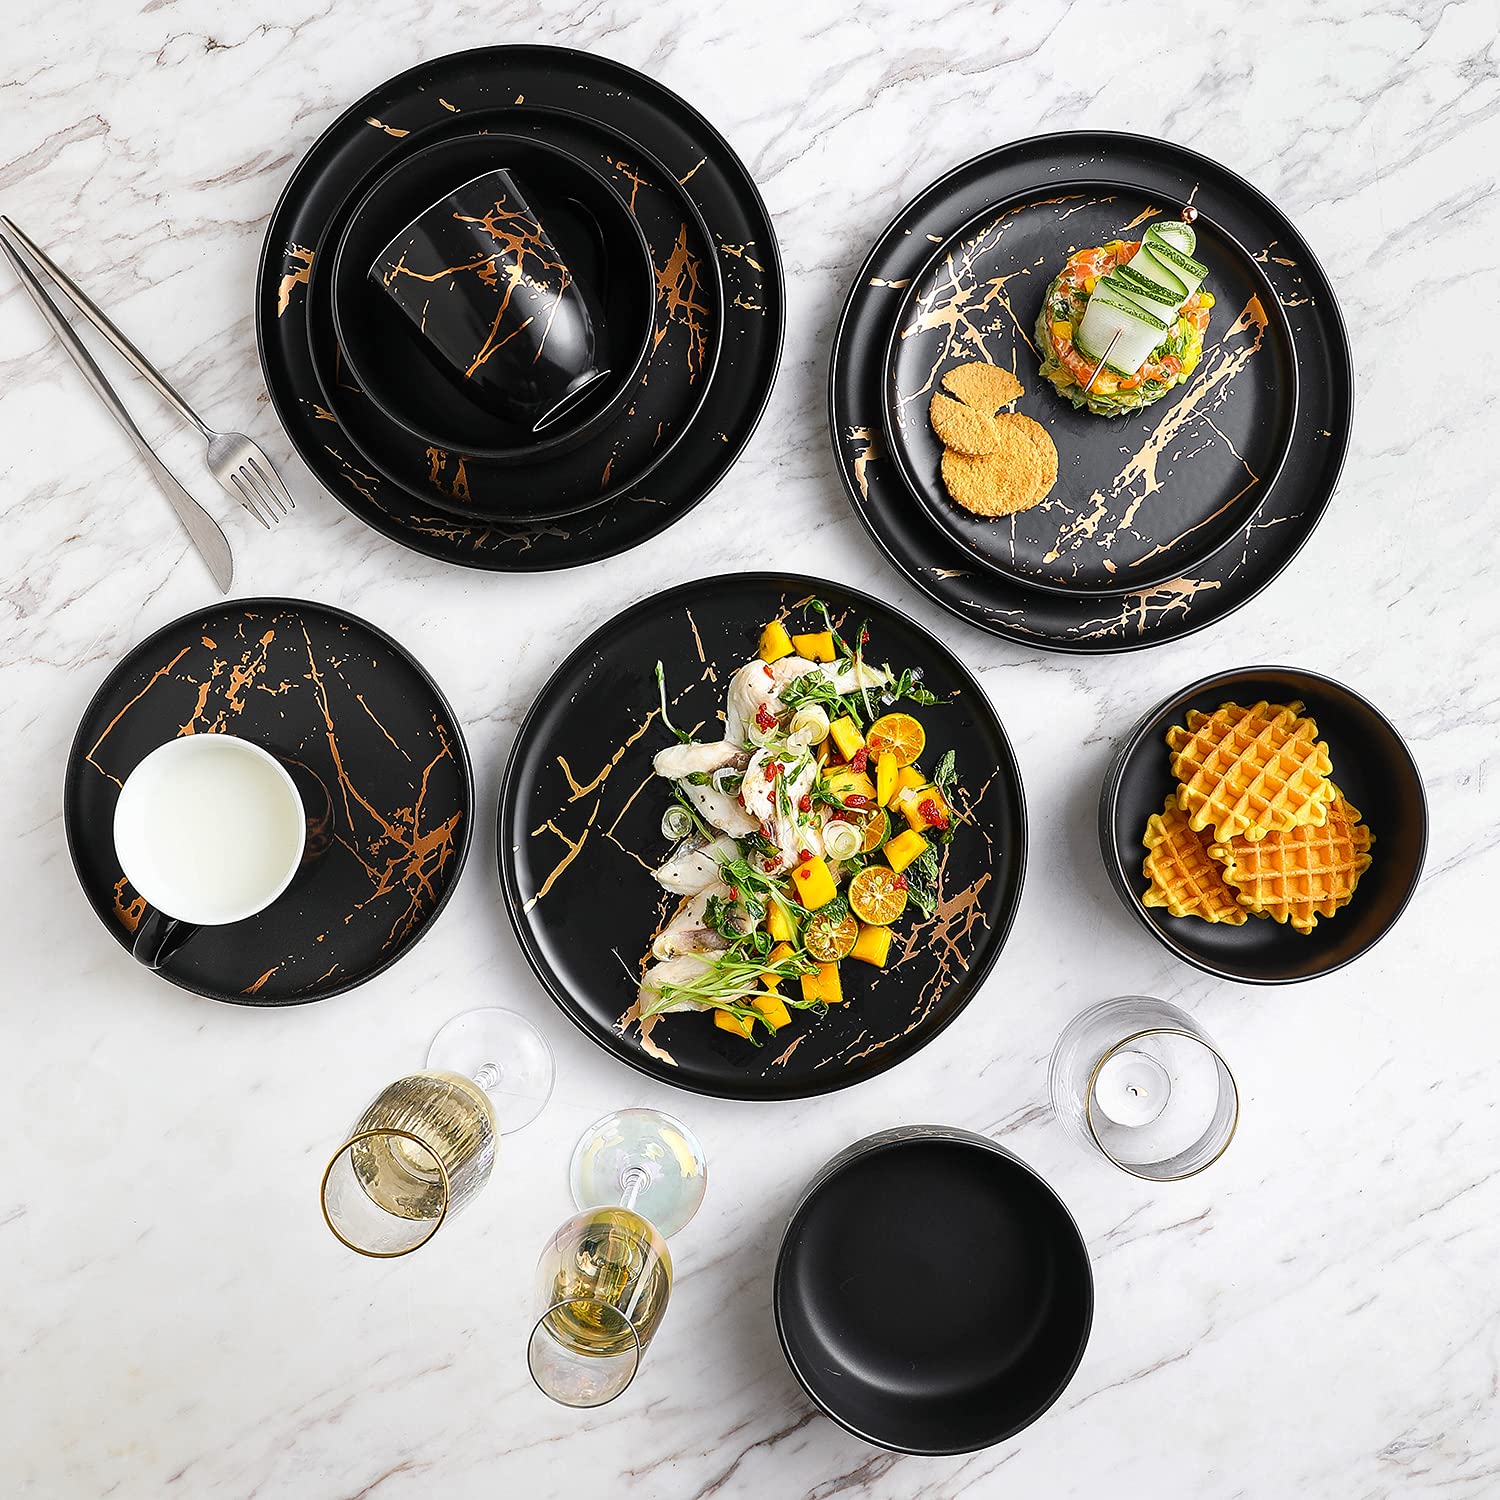 Stone Lain Modern Gold Splash Exquisite Fine China Dinnerware Set, 16 Piece - Service for 4, Black & Gold